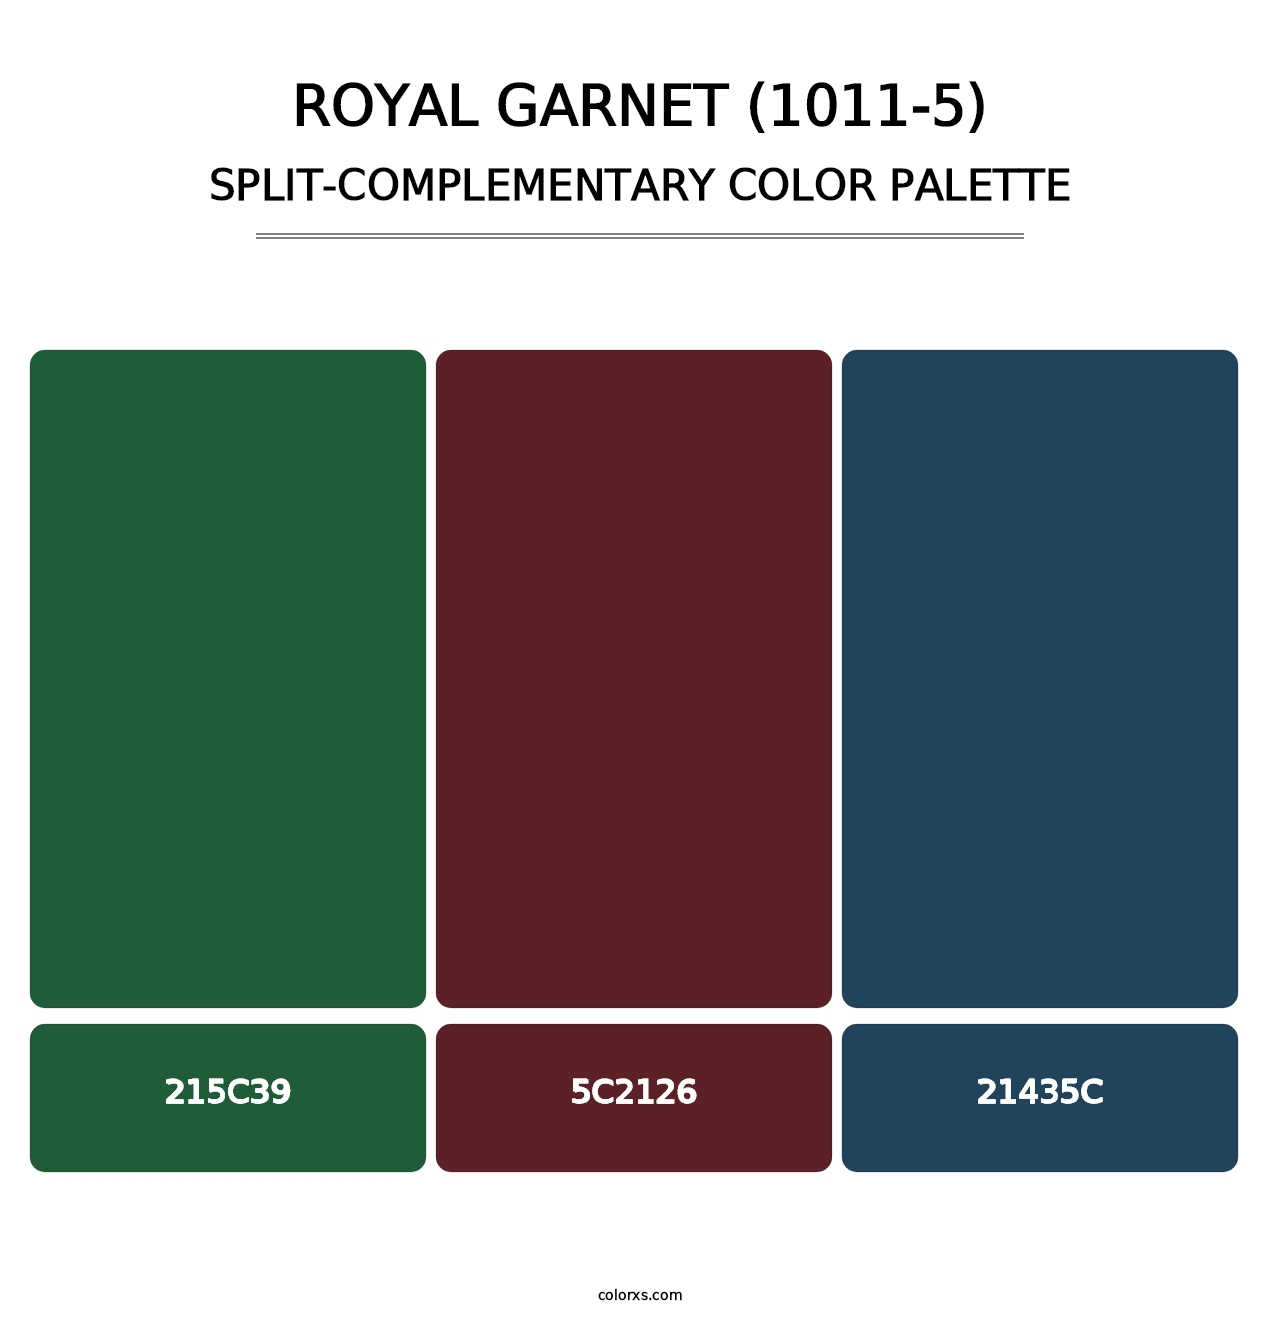 Royal Garnet (1011-5) - Split-Complementary Color Palette